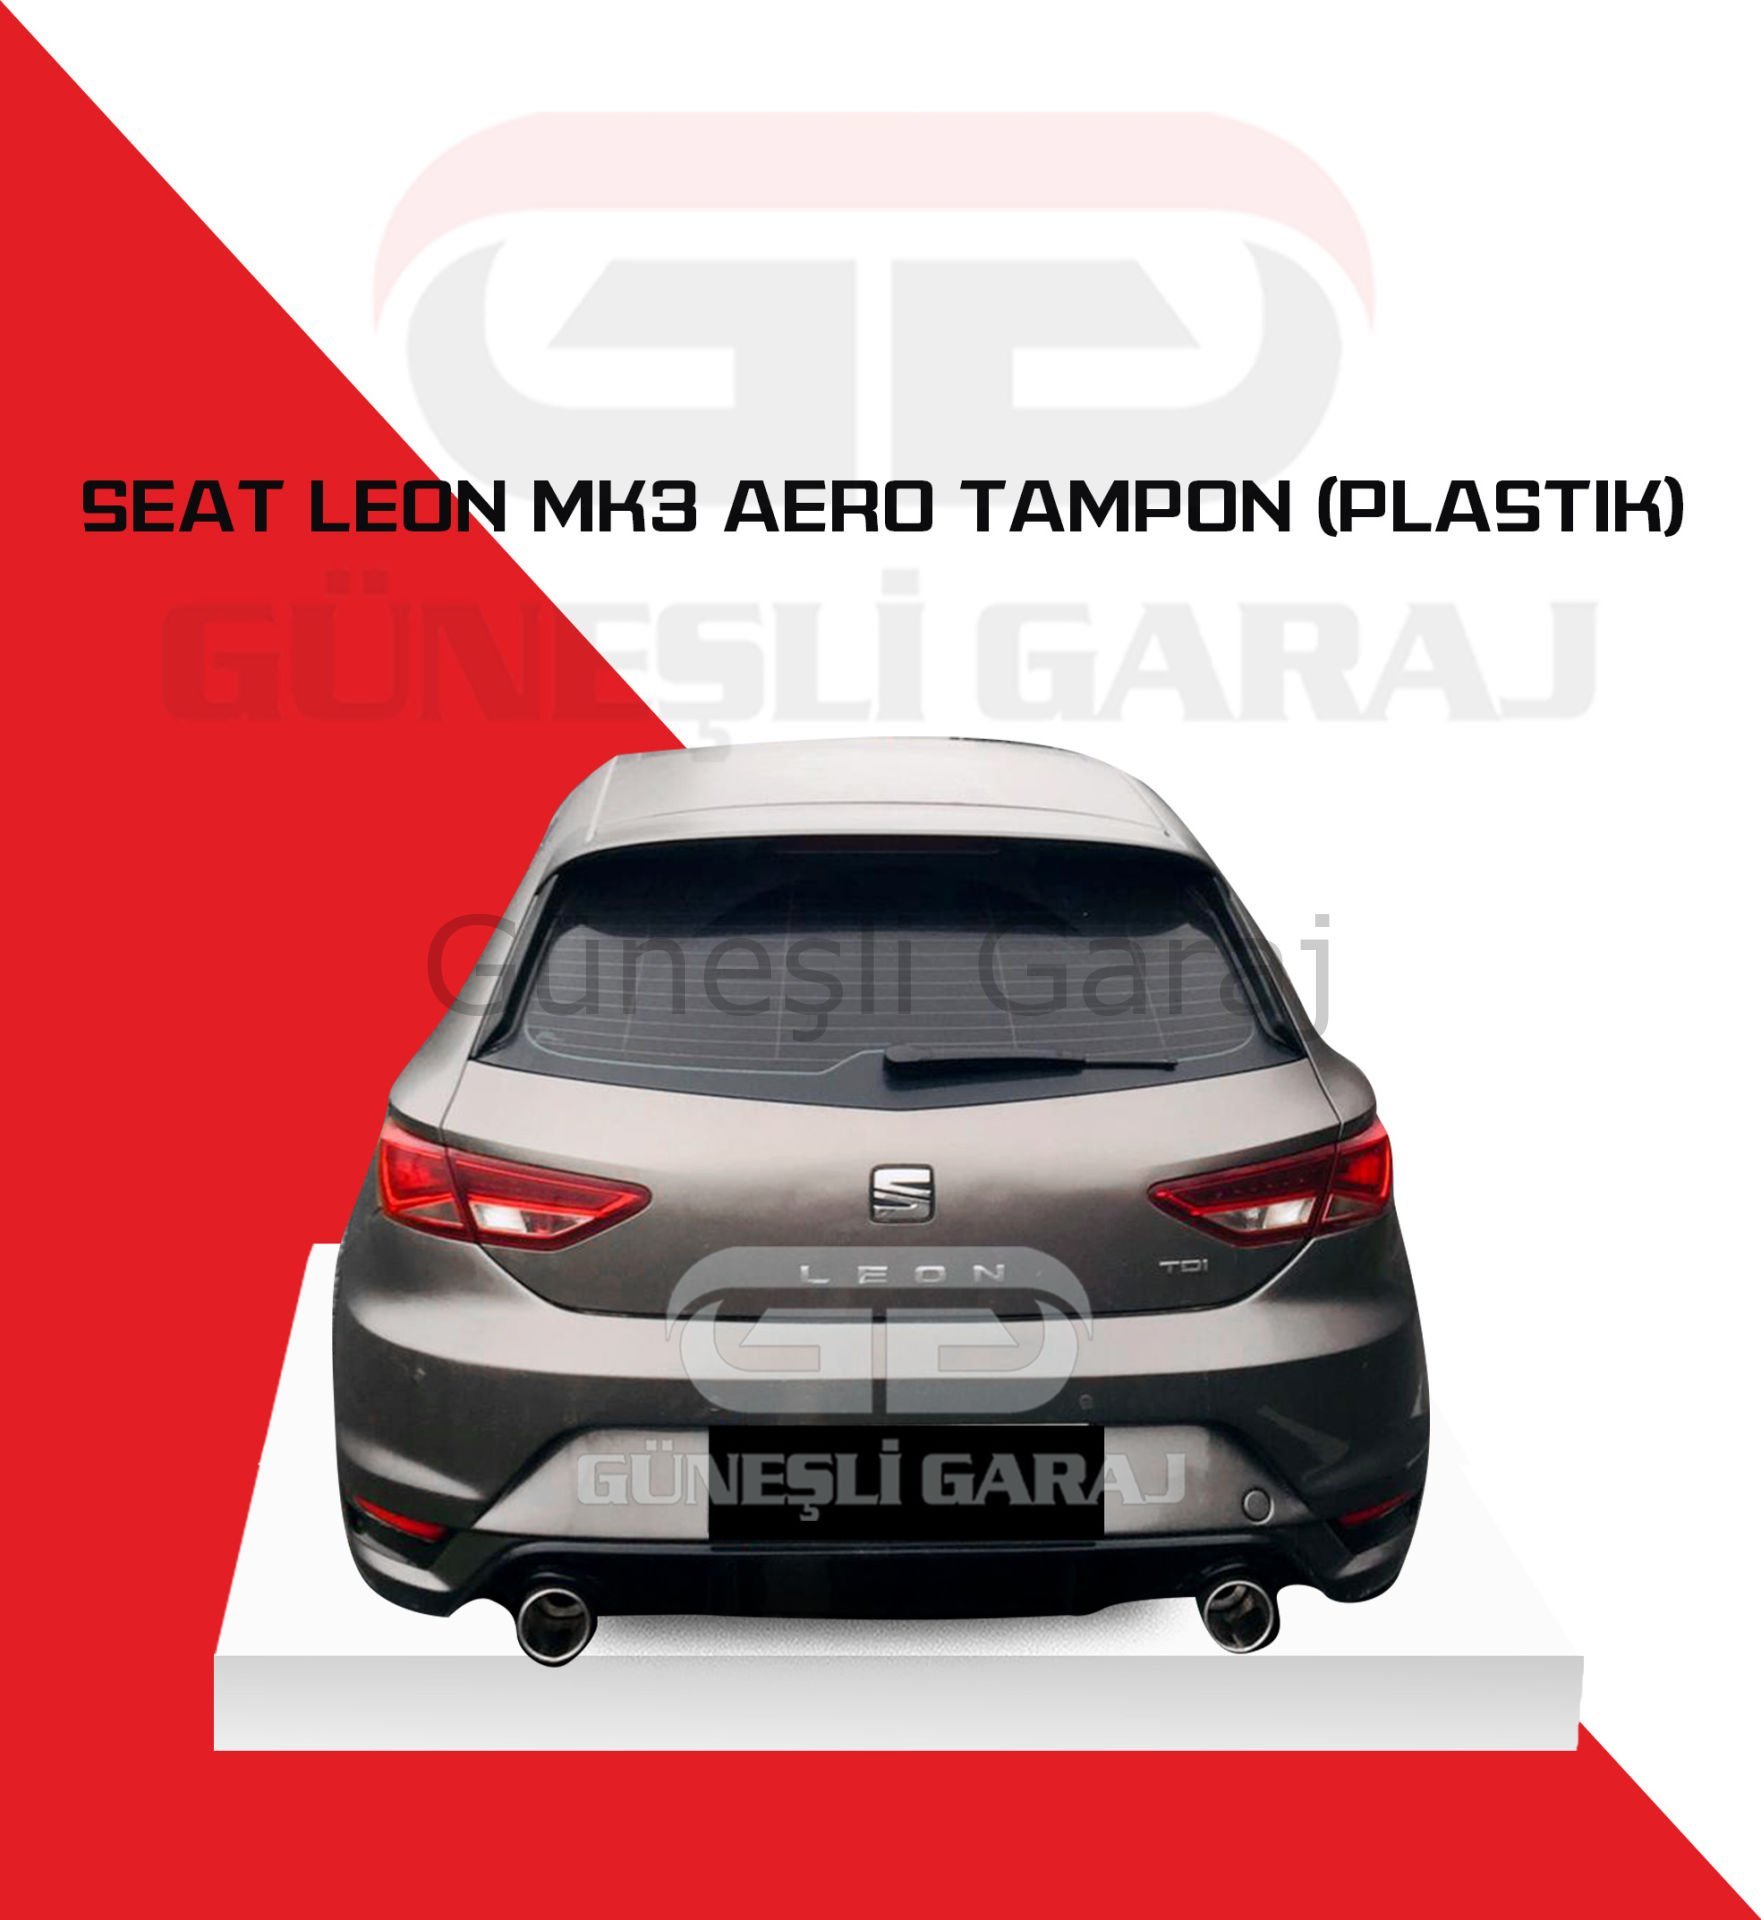 Seat Leon Mk3 Aero Tampon (Plastik)